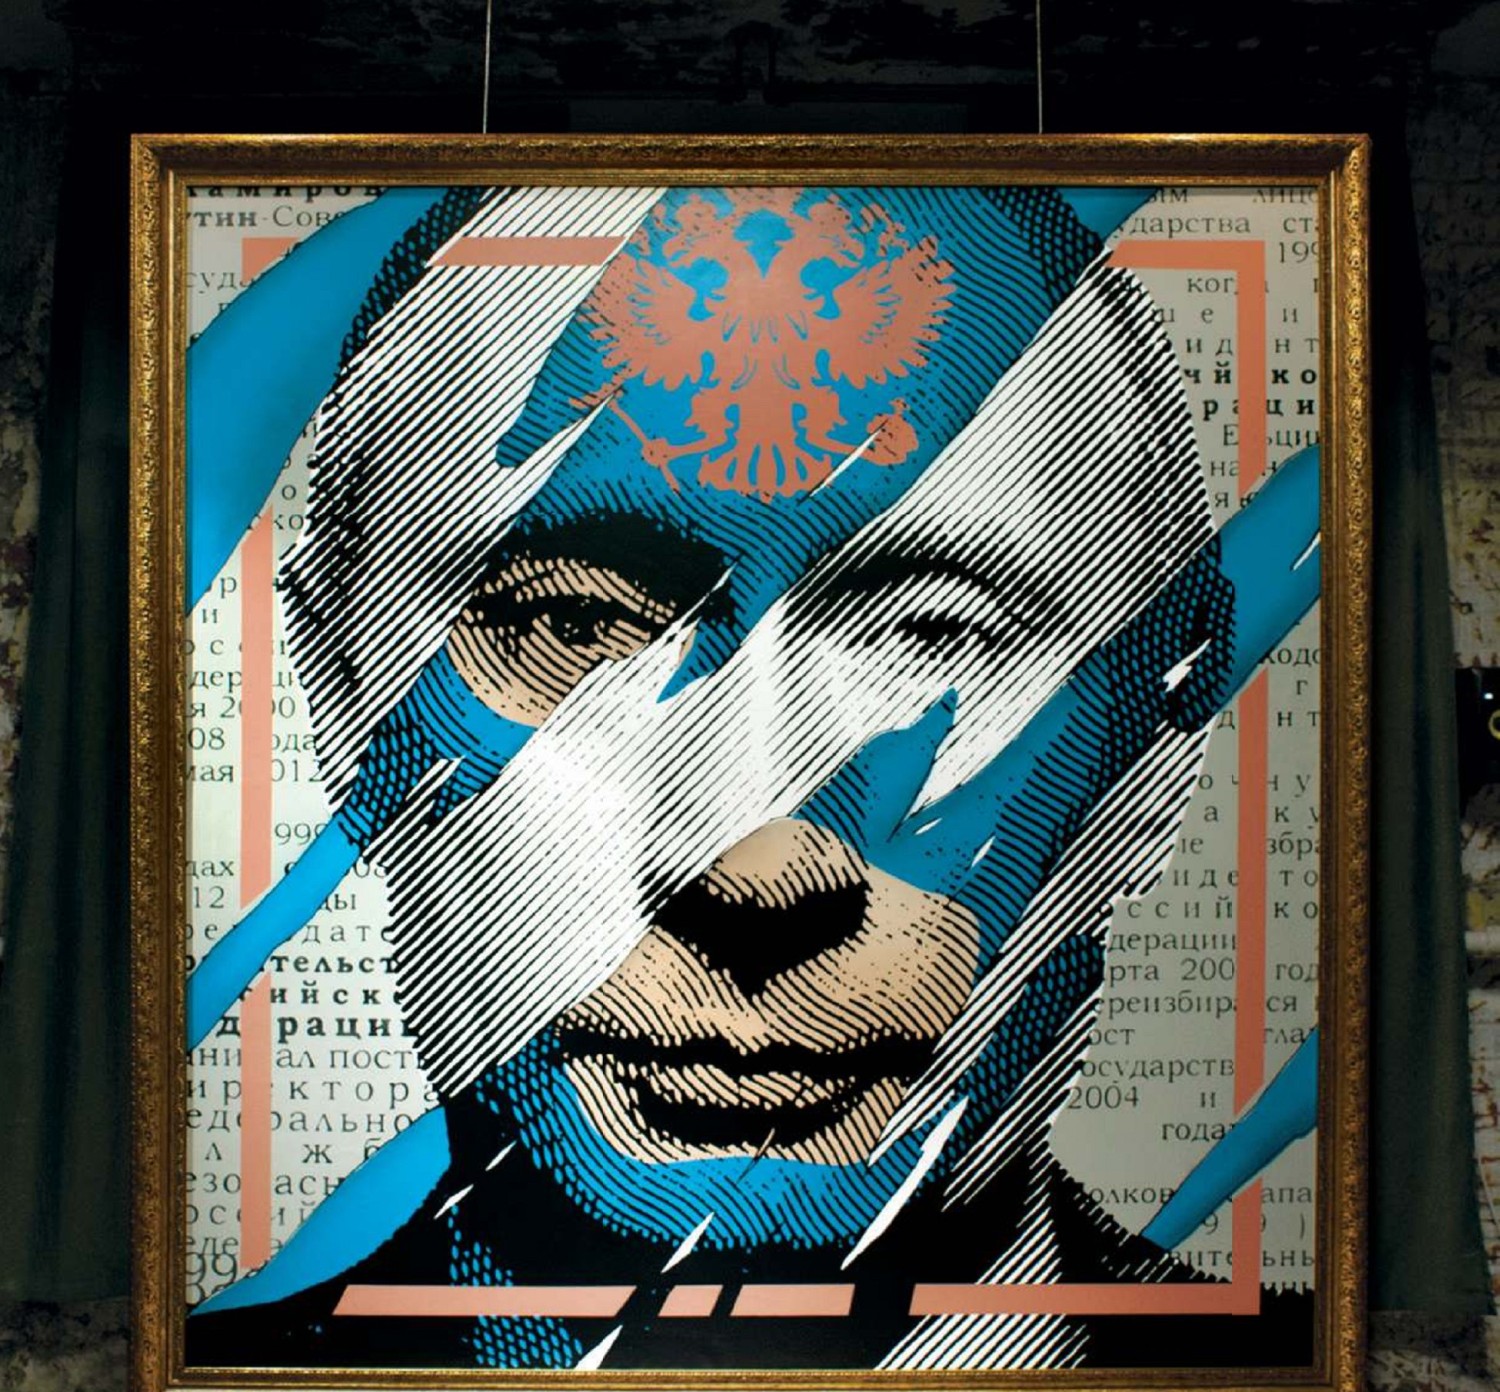 Newsweek: Ο Πούτιν υποβλήθηκε σε θεραπεία για τον καρκίνο-To 2022 σημειώθηκε απόπειρα δολοφονίας του